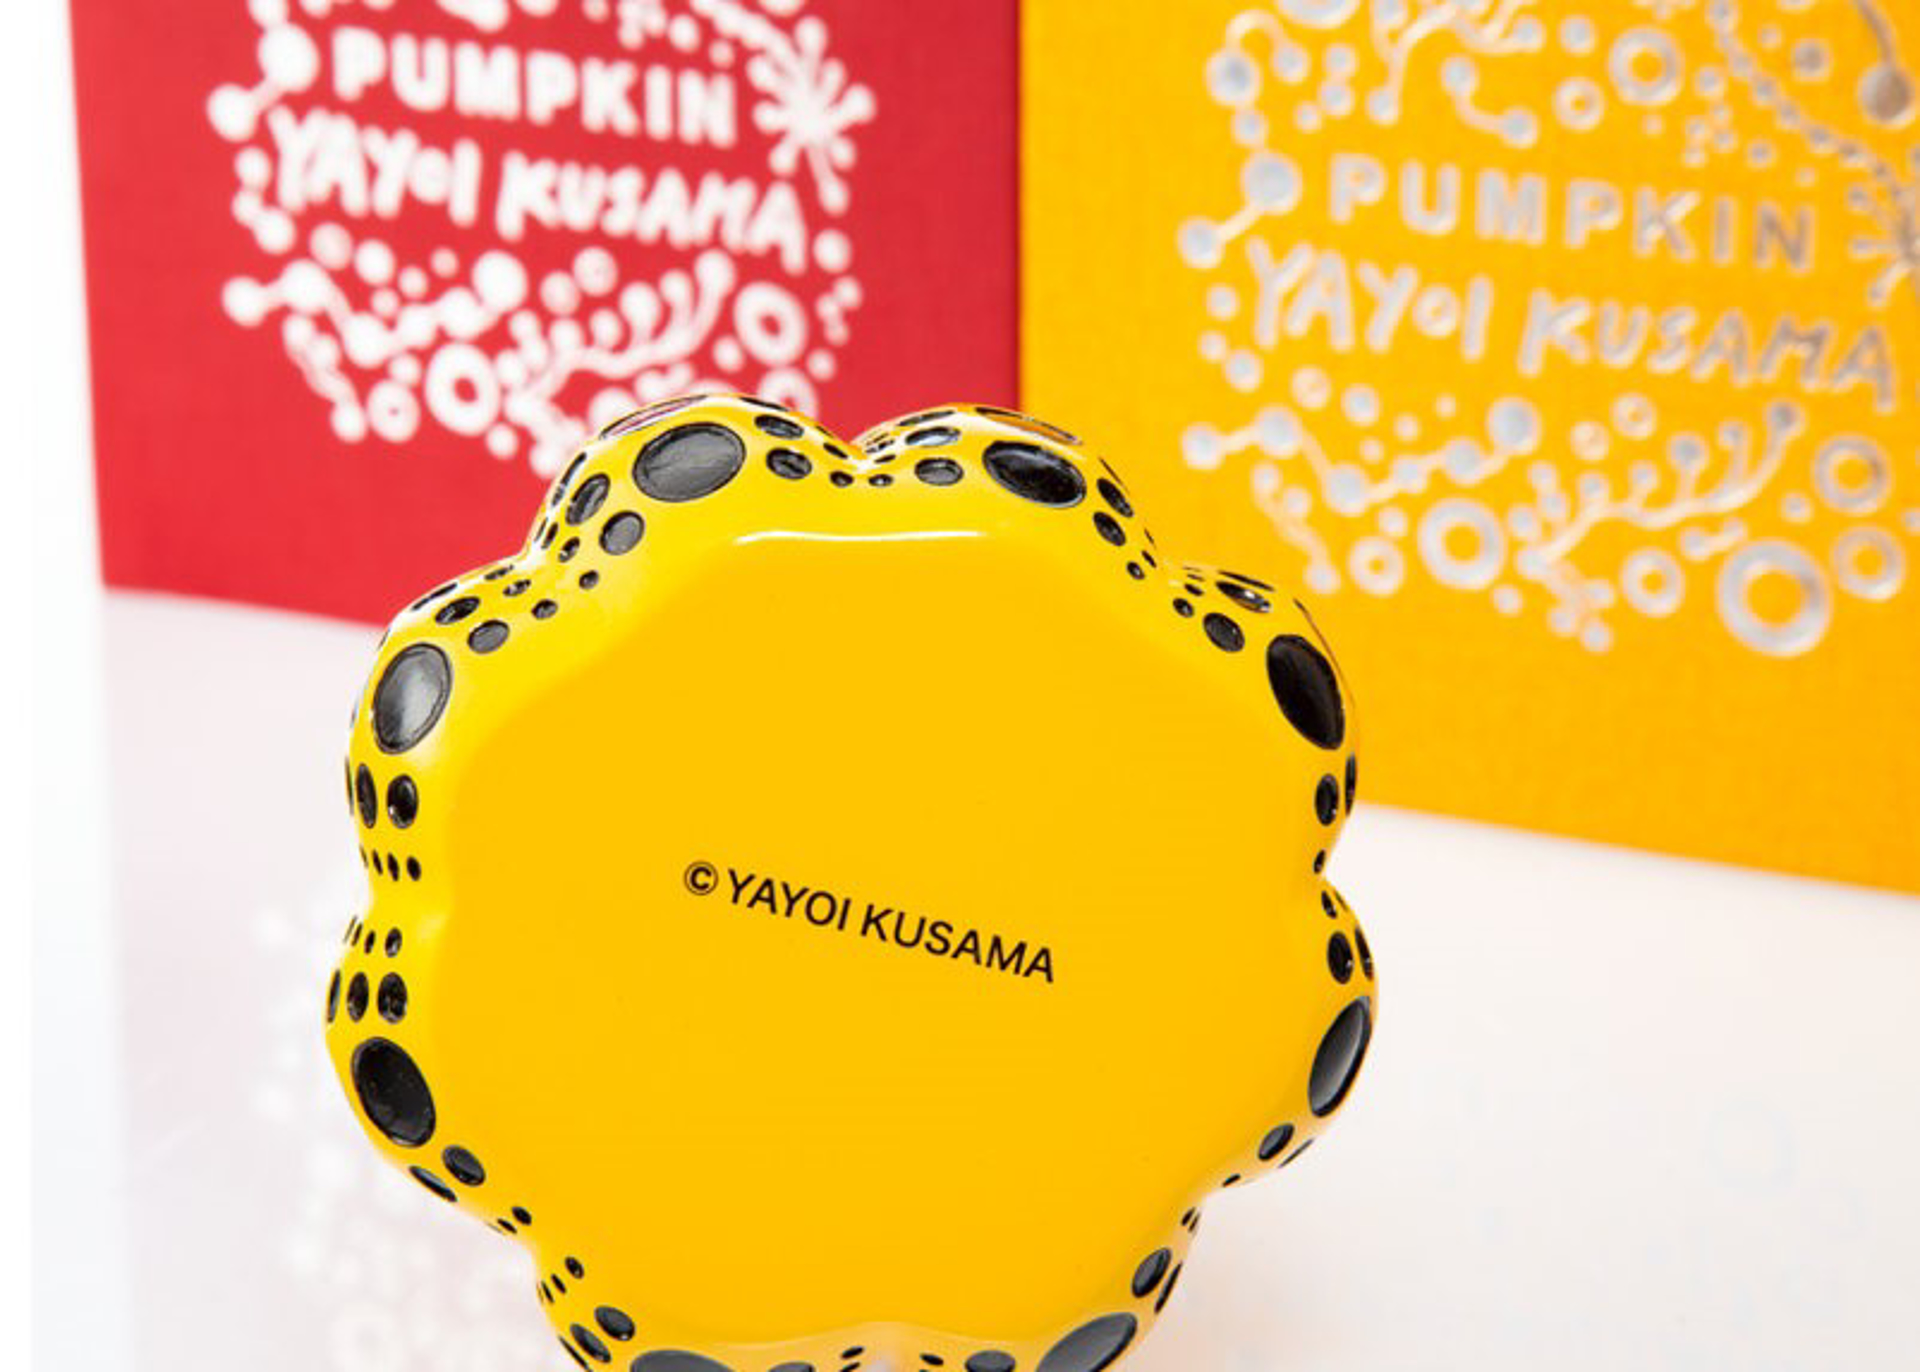 Red and Yellow Pumpkin (Two Works) by Yayoi Kusama